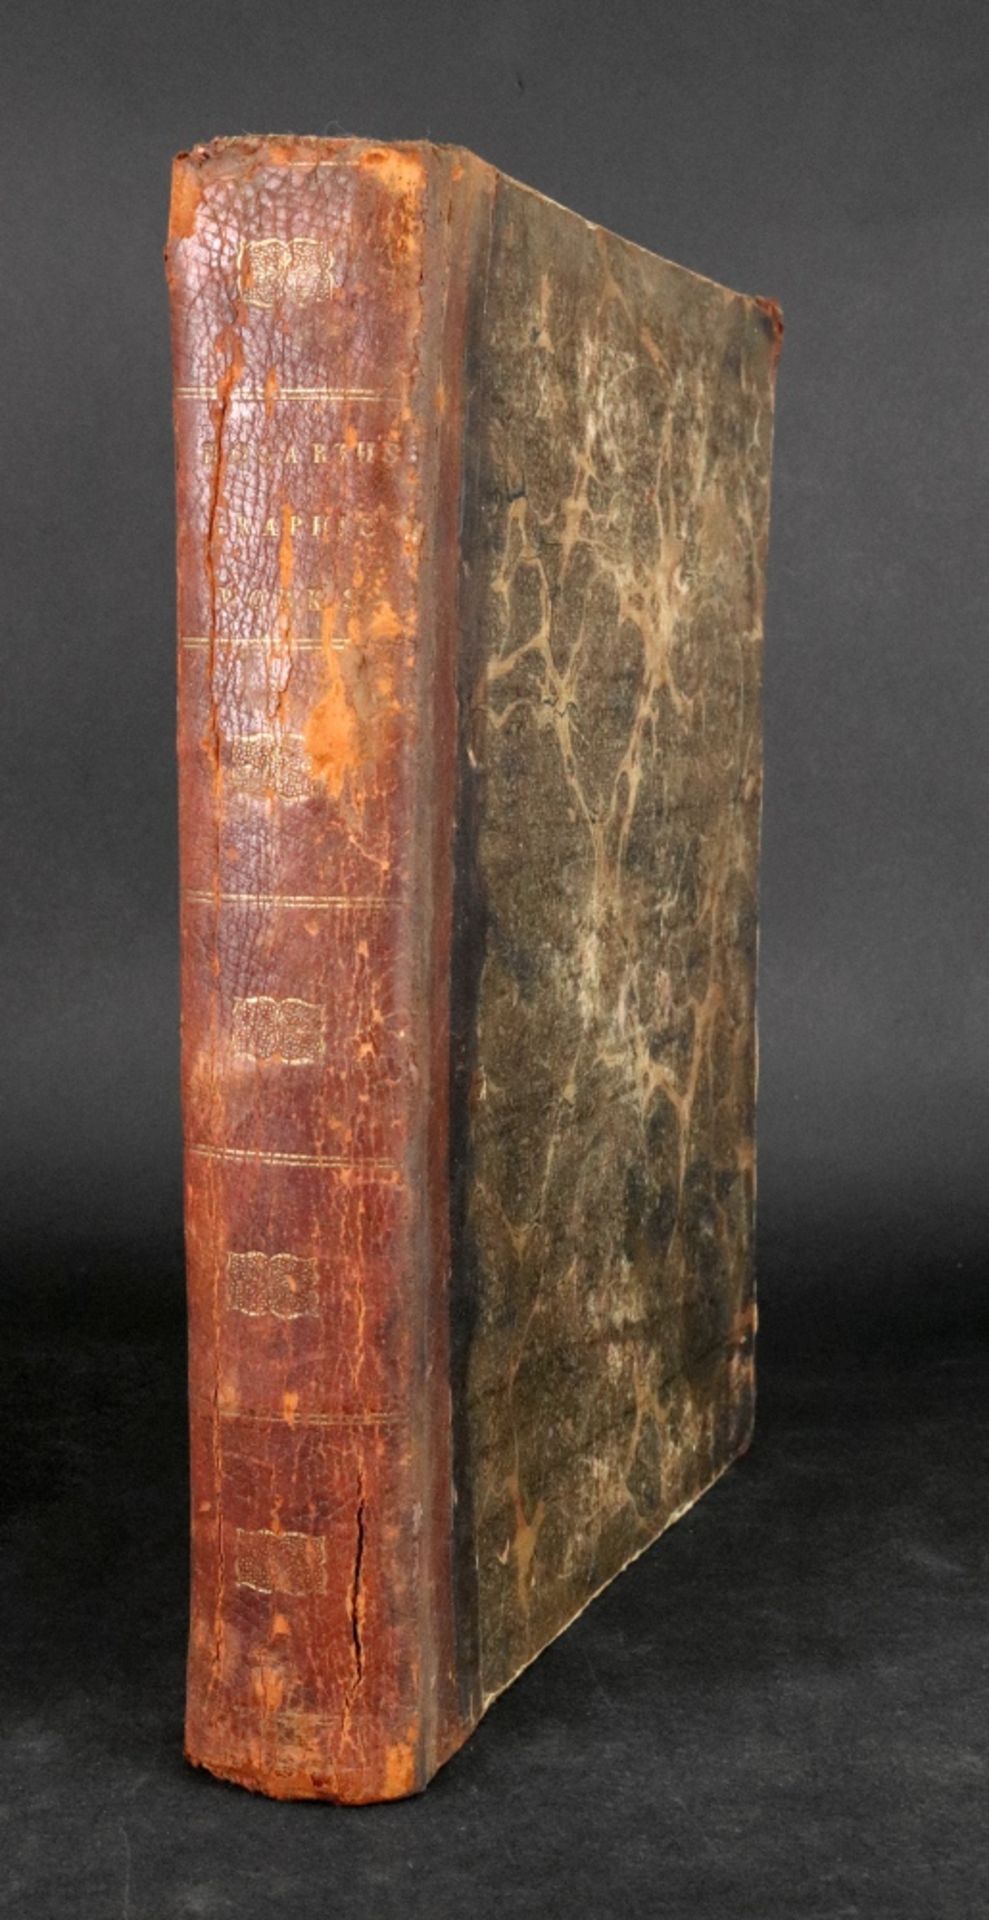 COOK (Thomas) The Genuine Graphic Works of William Hogarth, London: 1813, Longman, Hurst, Rees,